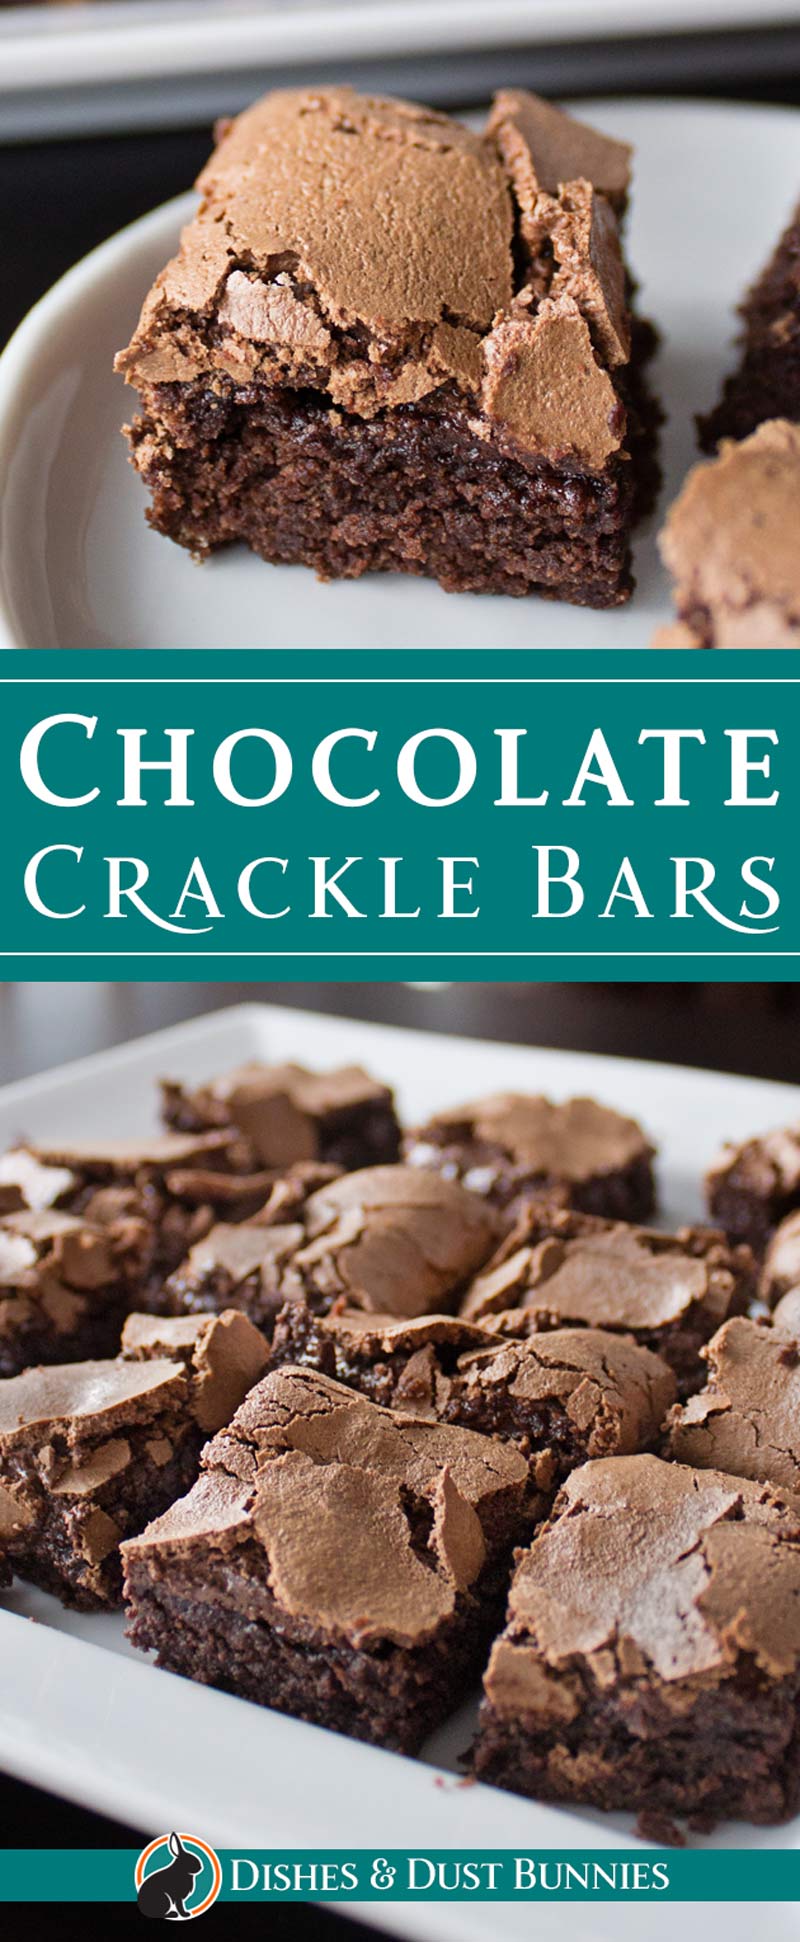 Chocolate Crackle Bars from dishesanddustbunnies.com